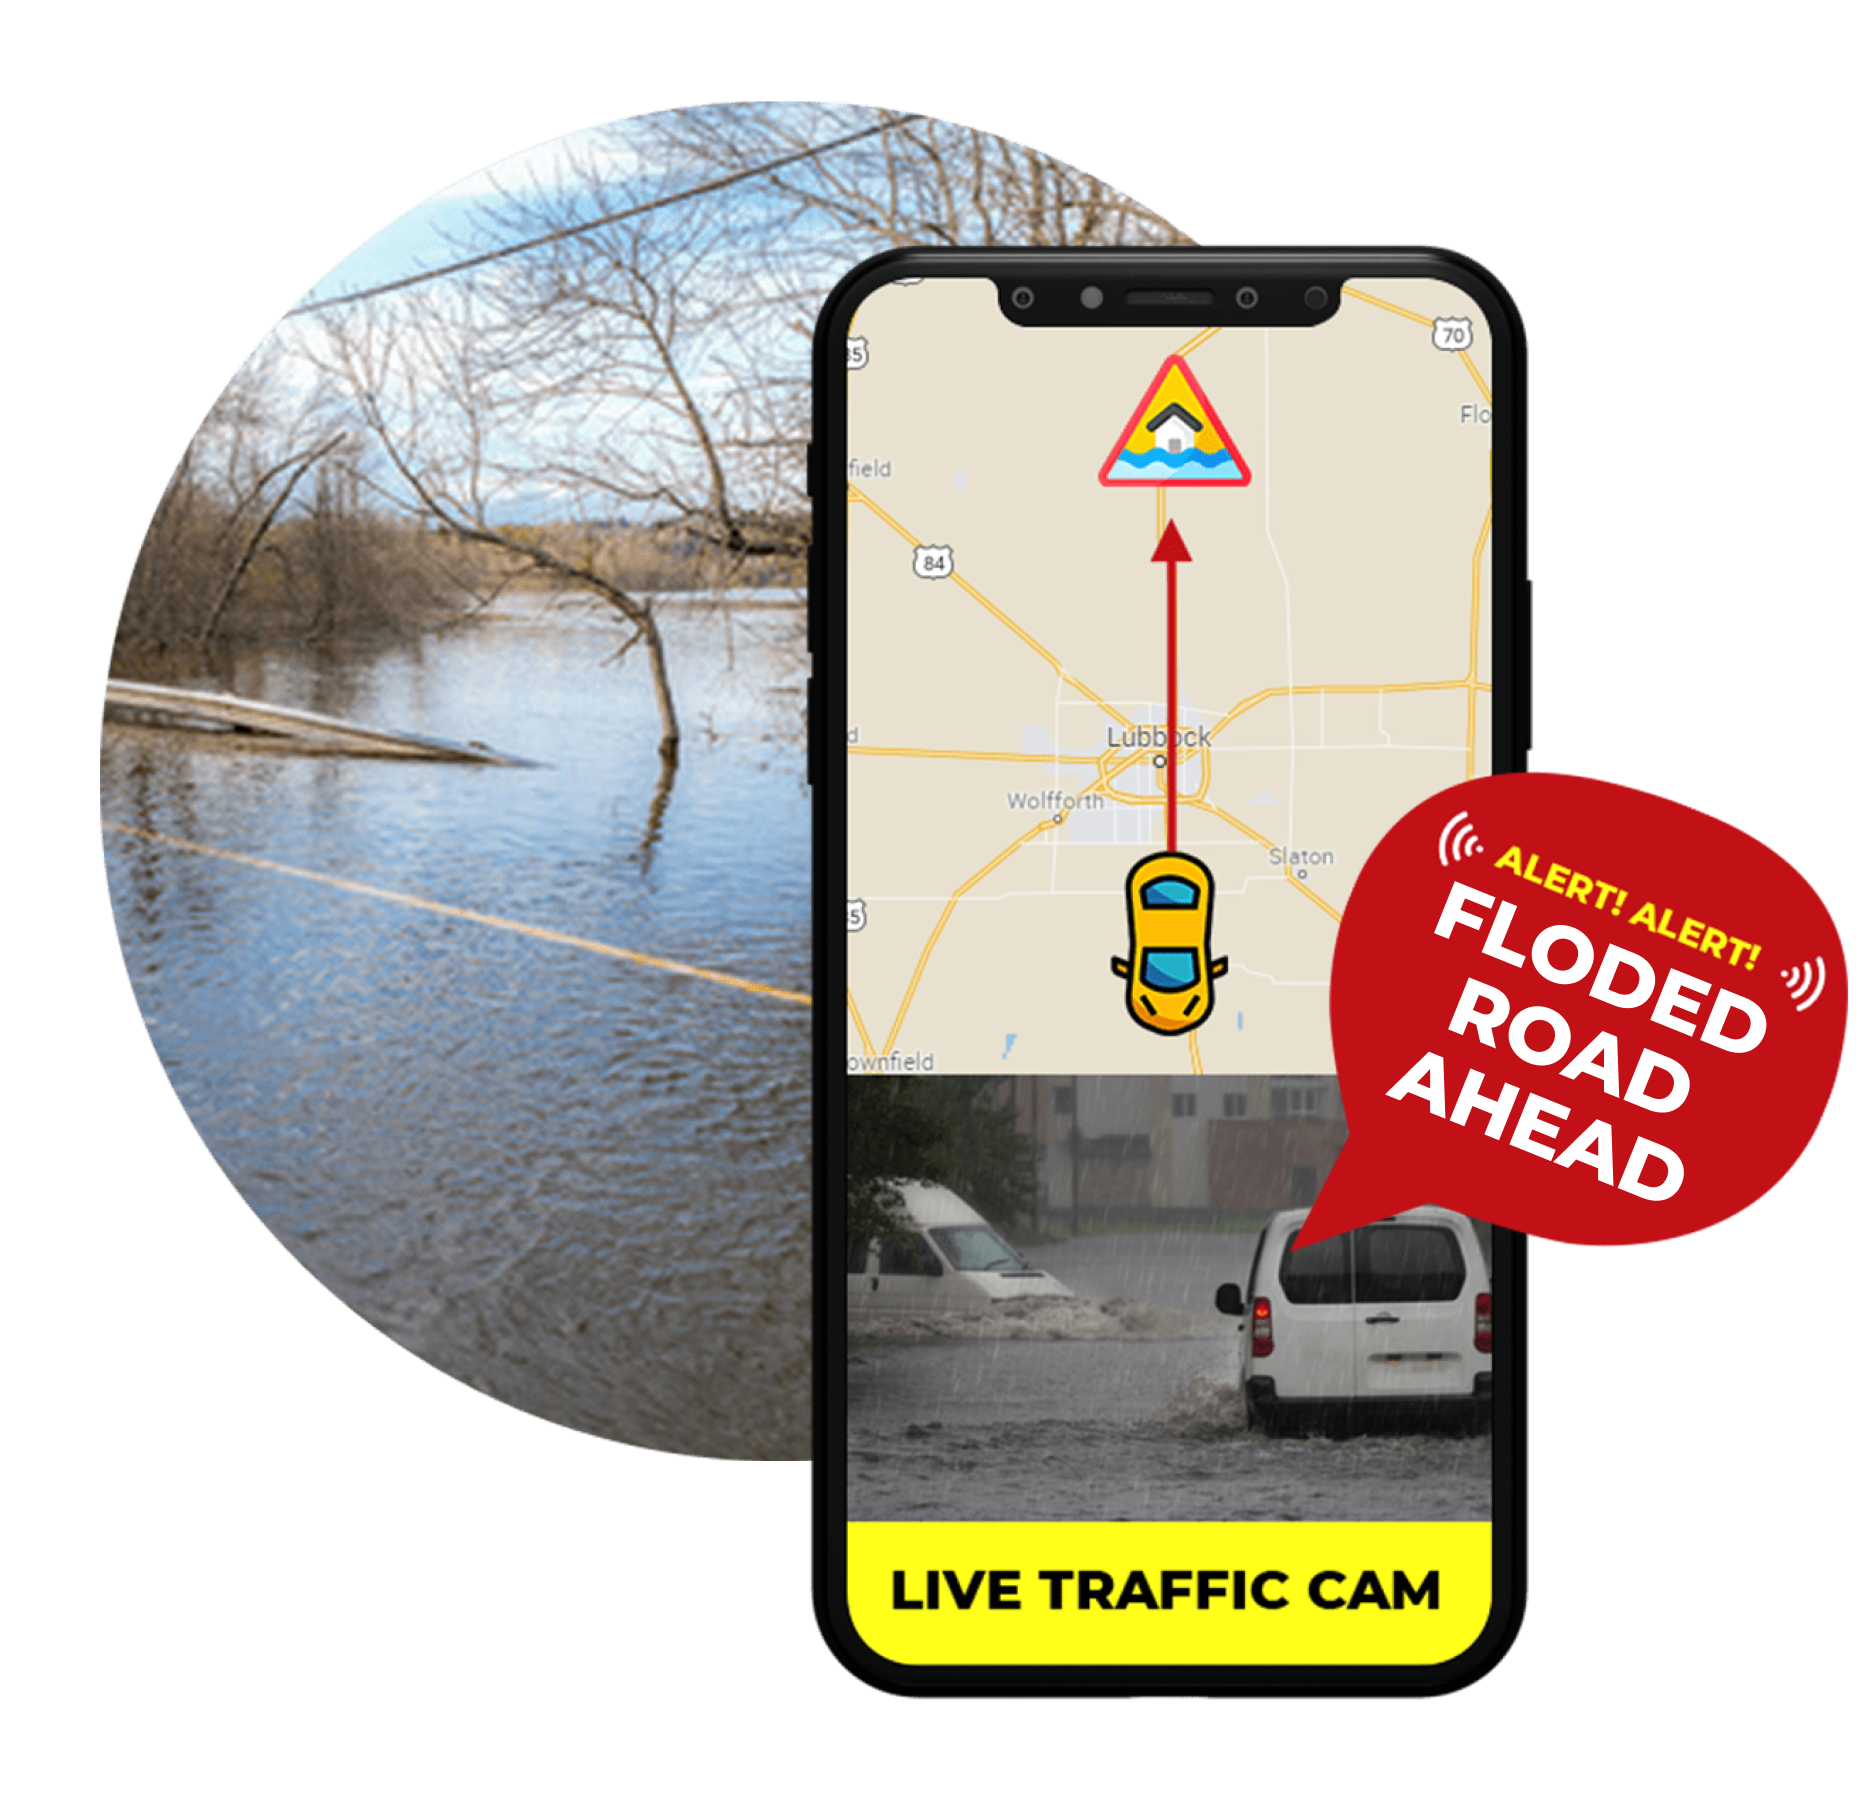 Flooded road ahead